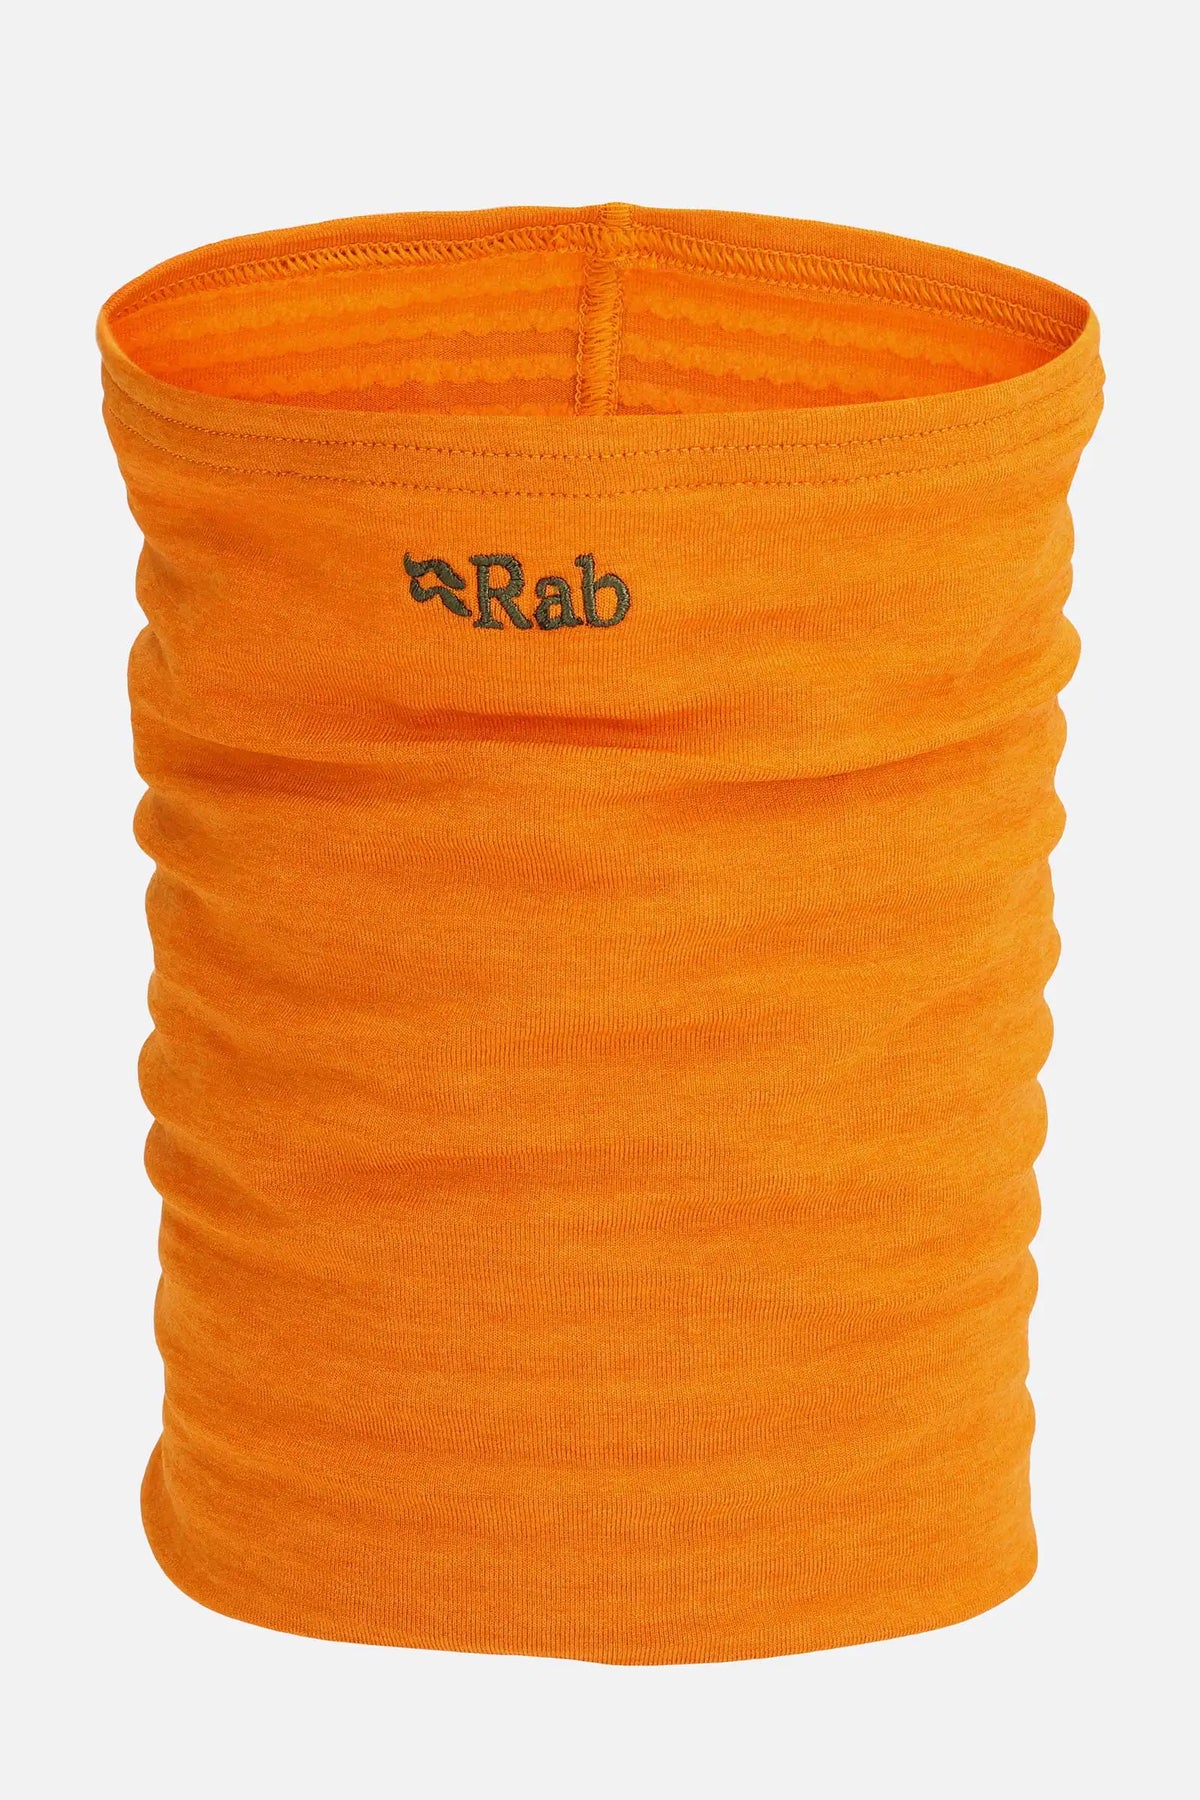 Rab Filament Neck Tube